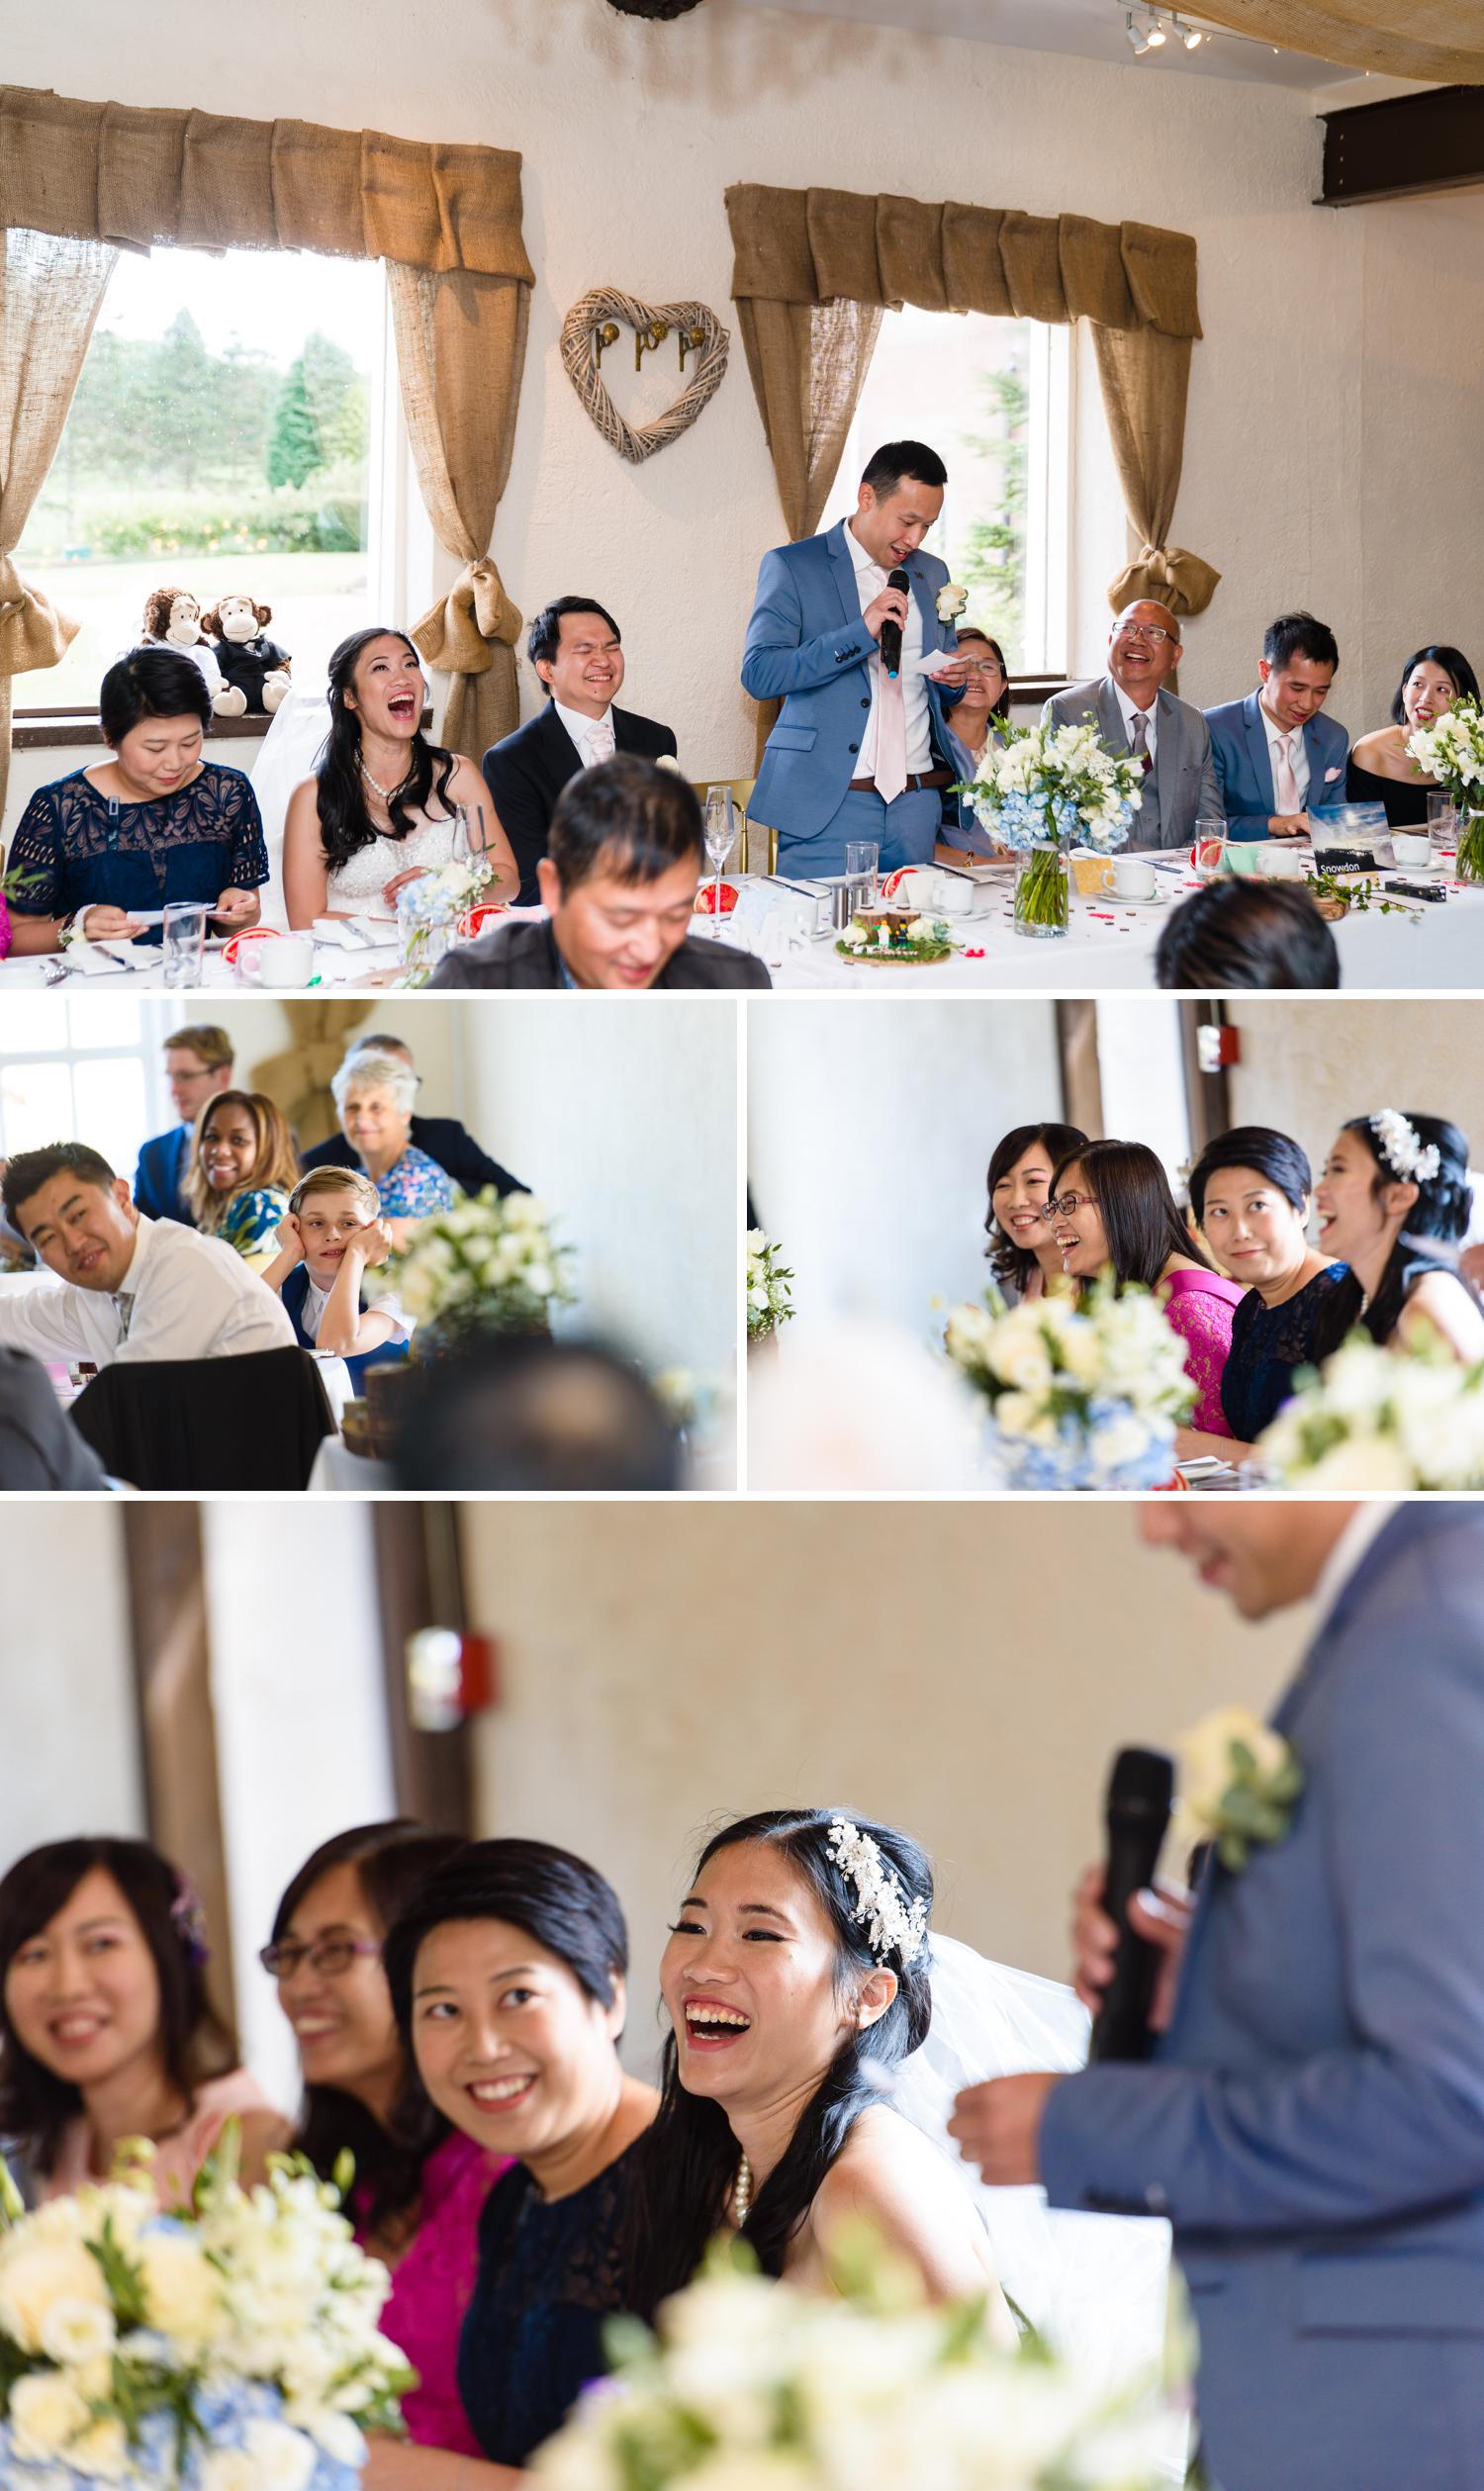 Eriviat Hall Wedding speech photos from Leona & Steven's wedding day